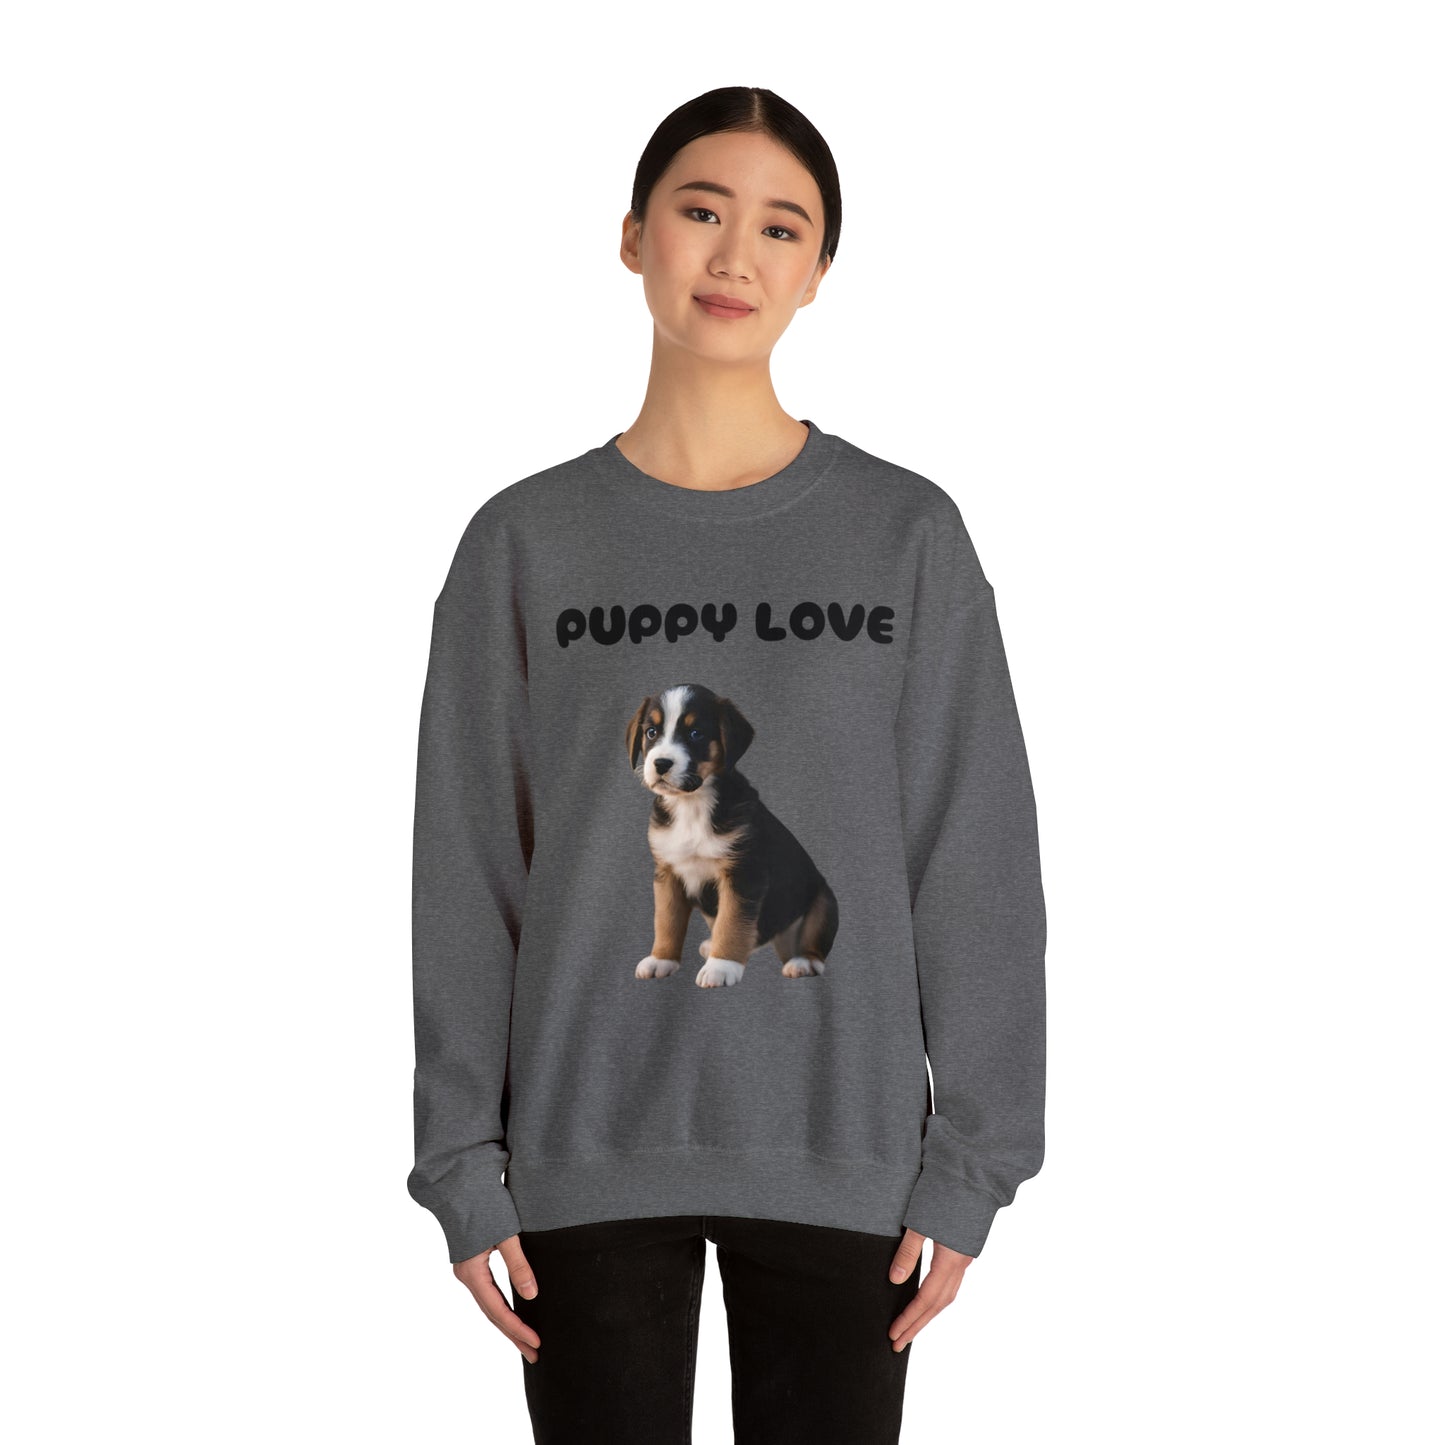 Puppy Love sweatshirt for dog lovers